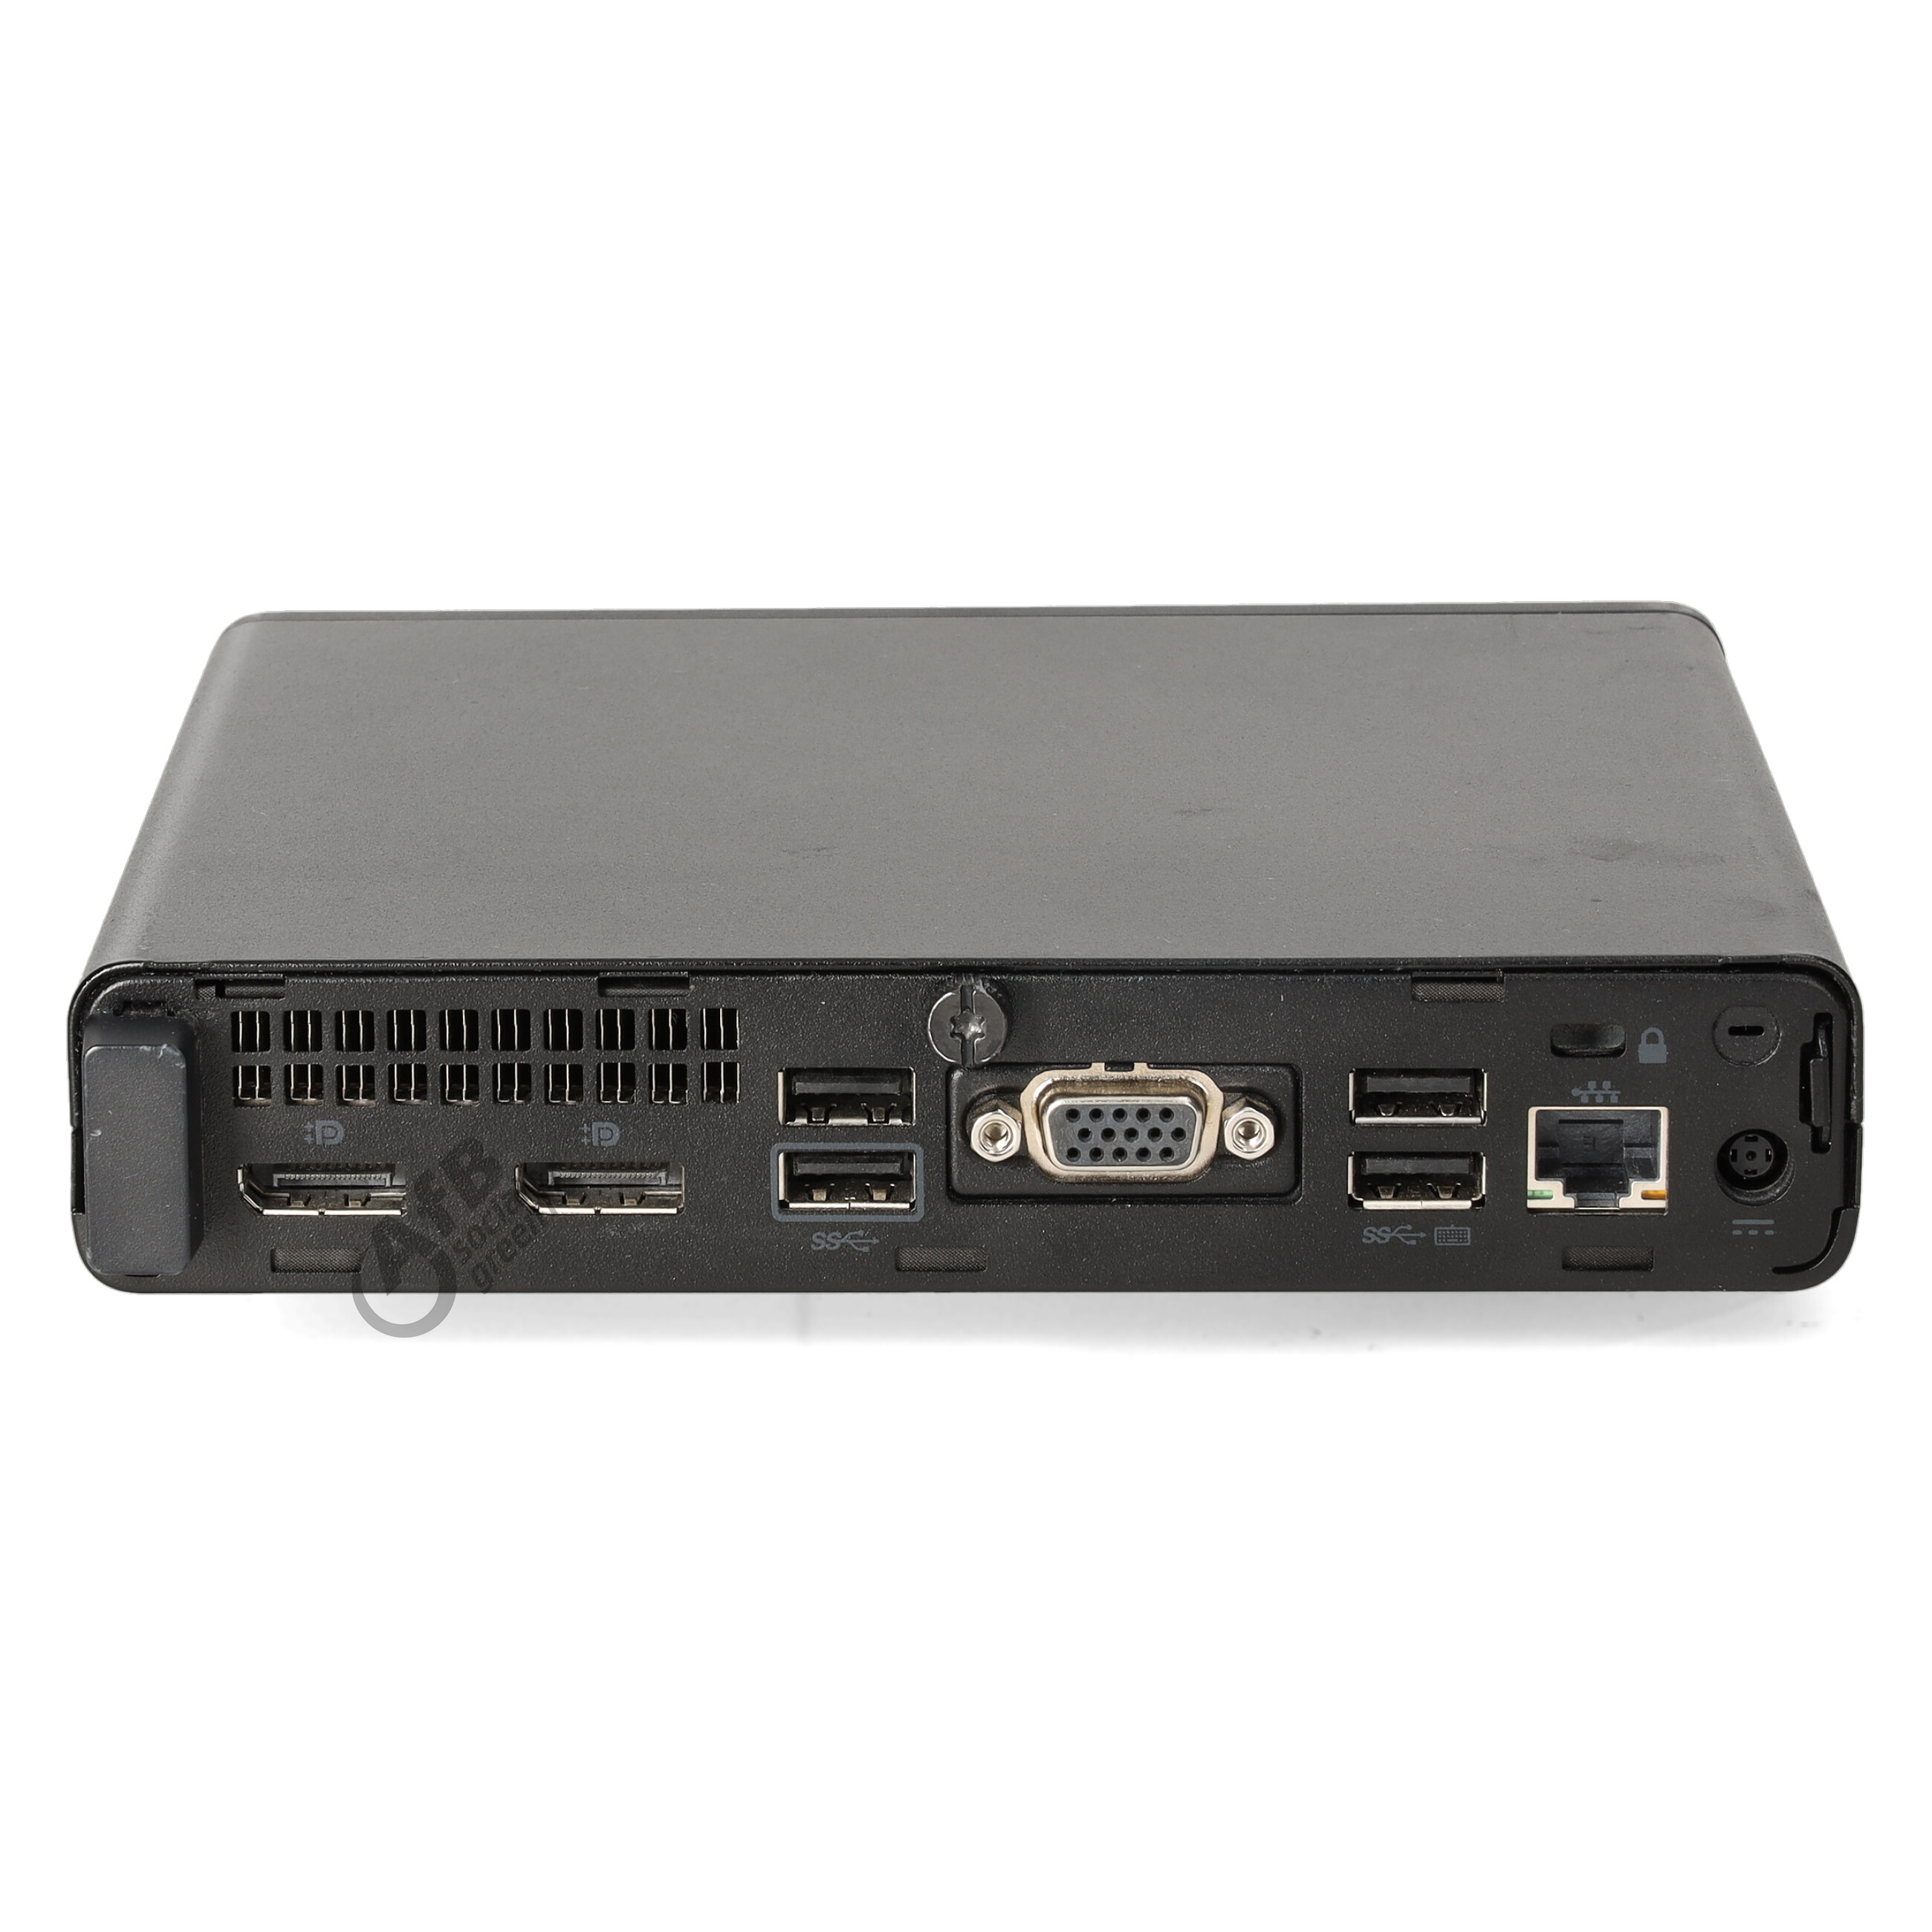 HP EliteDesk 705 G4 Mini PC - Mini-PC - AMD Ryzen 5 Pro 2400GE @ 3,2 GHz - 8 GB DDR4 - 250 GB SSD - ohne Laufwerk - Windows 10 Professional